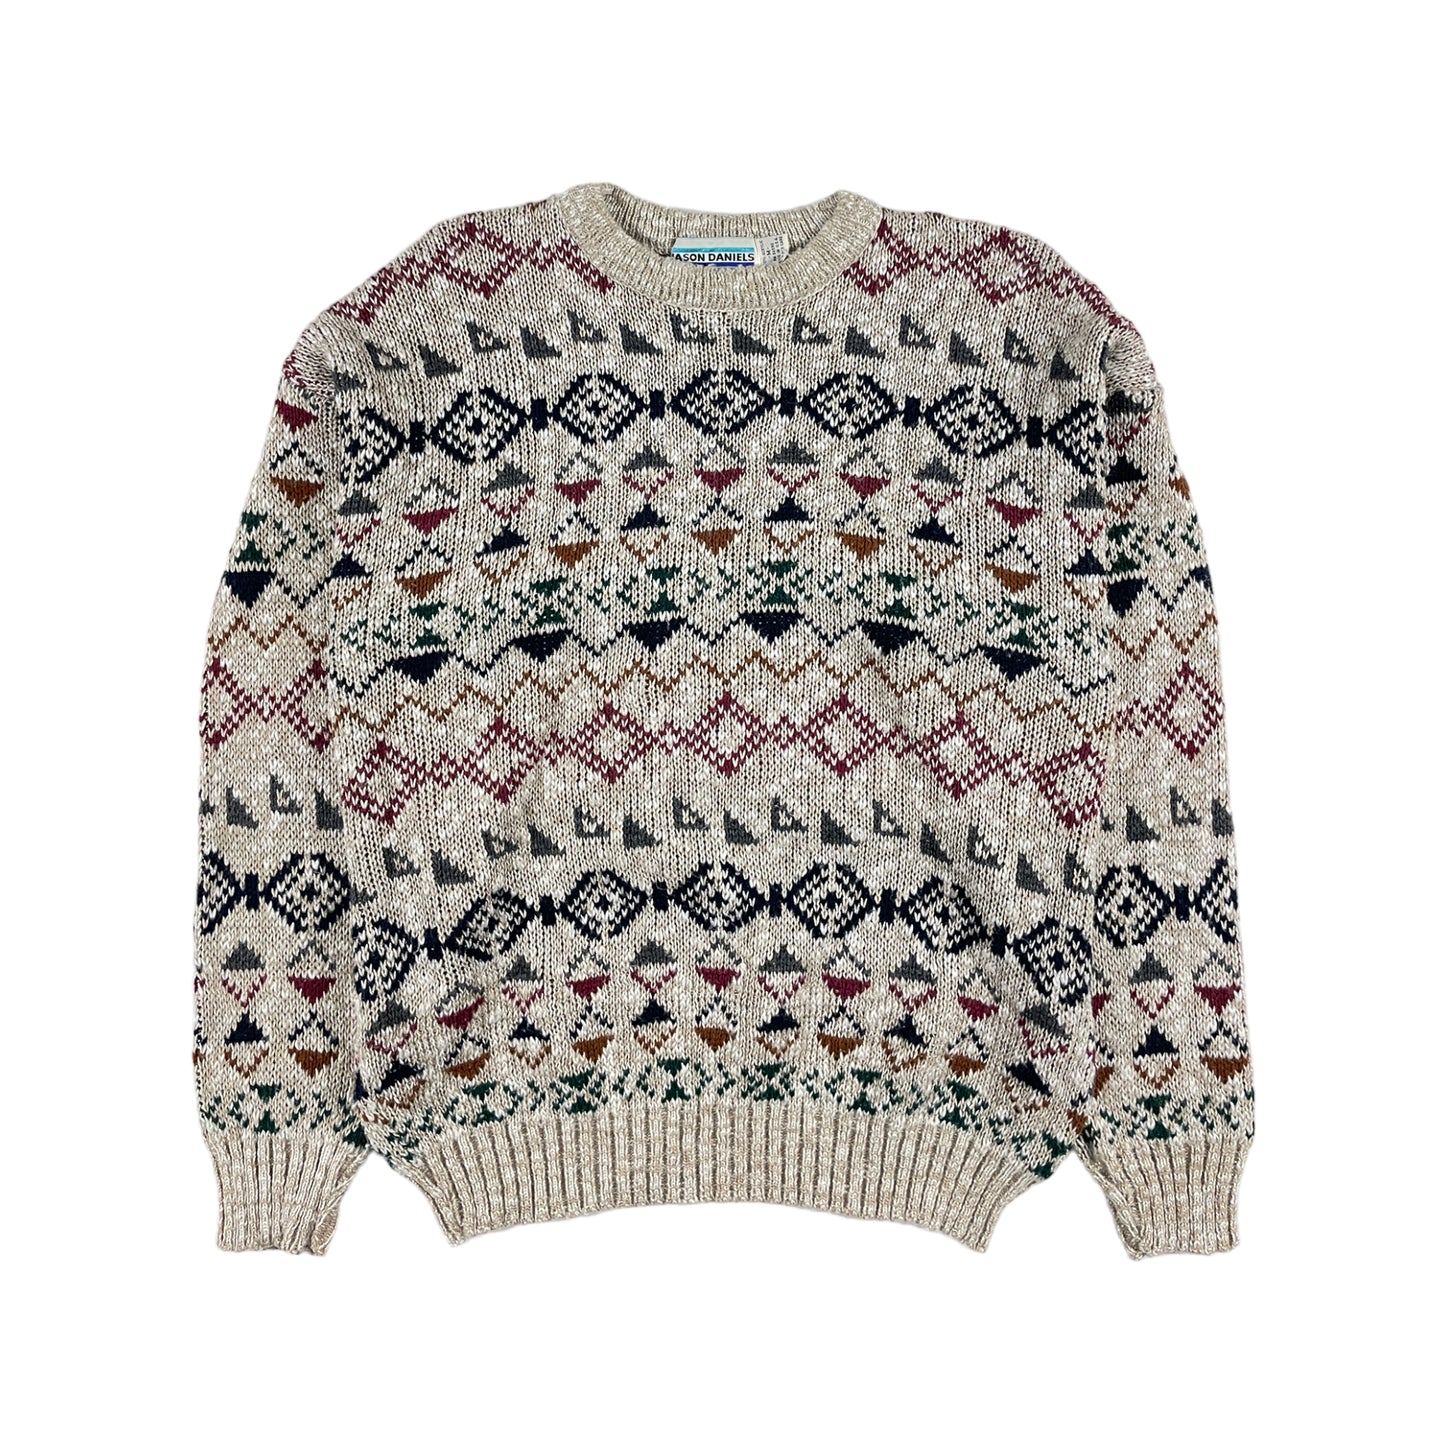 Jason Daniel's Knit Sweater